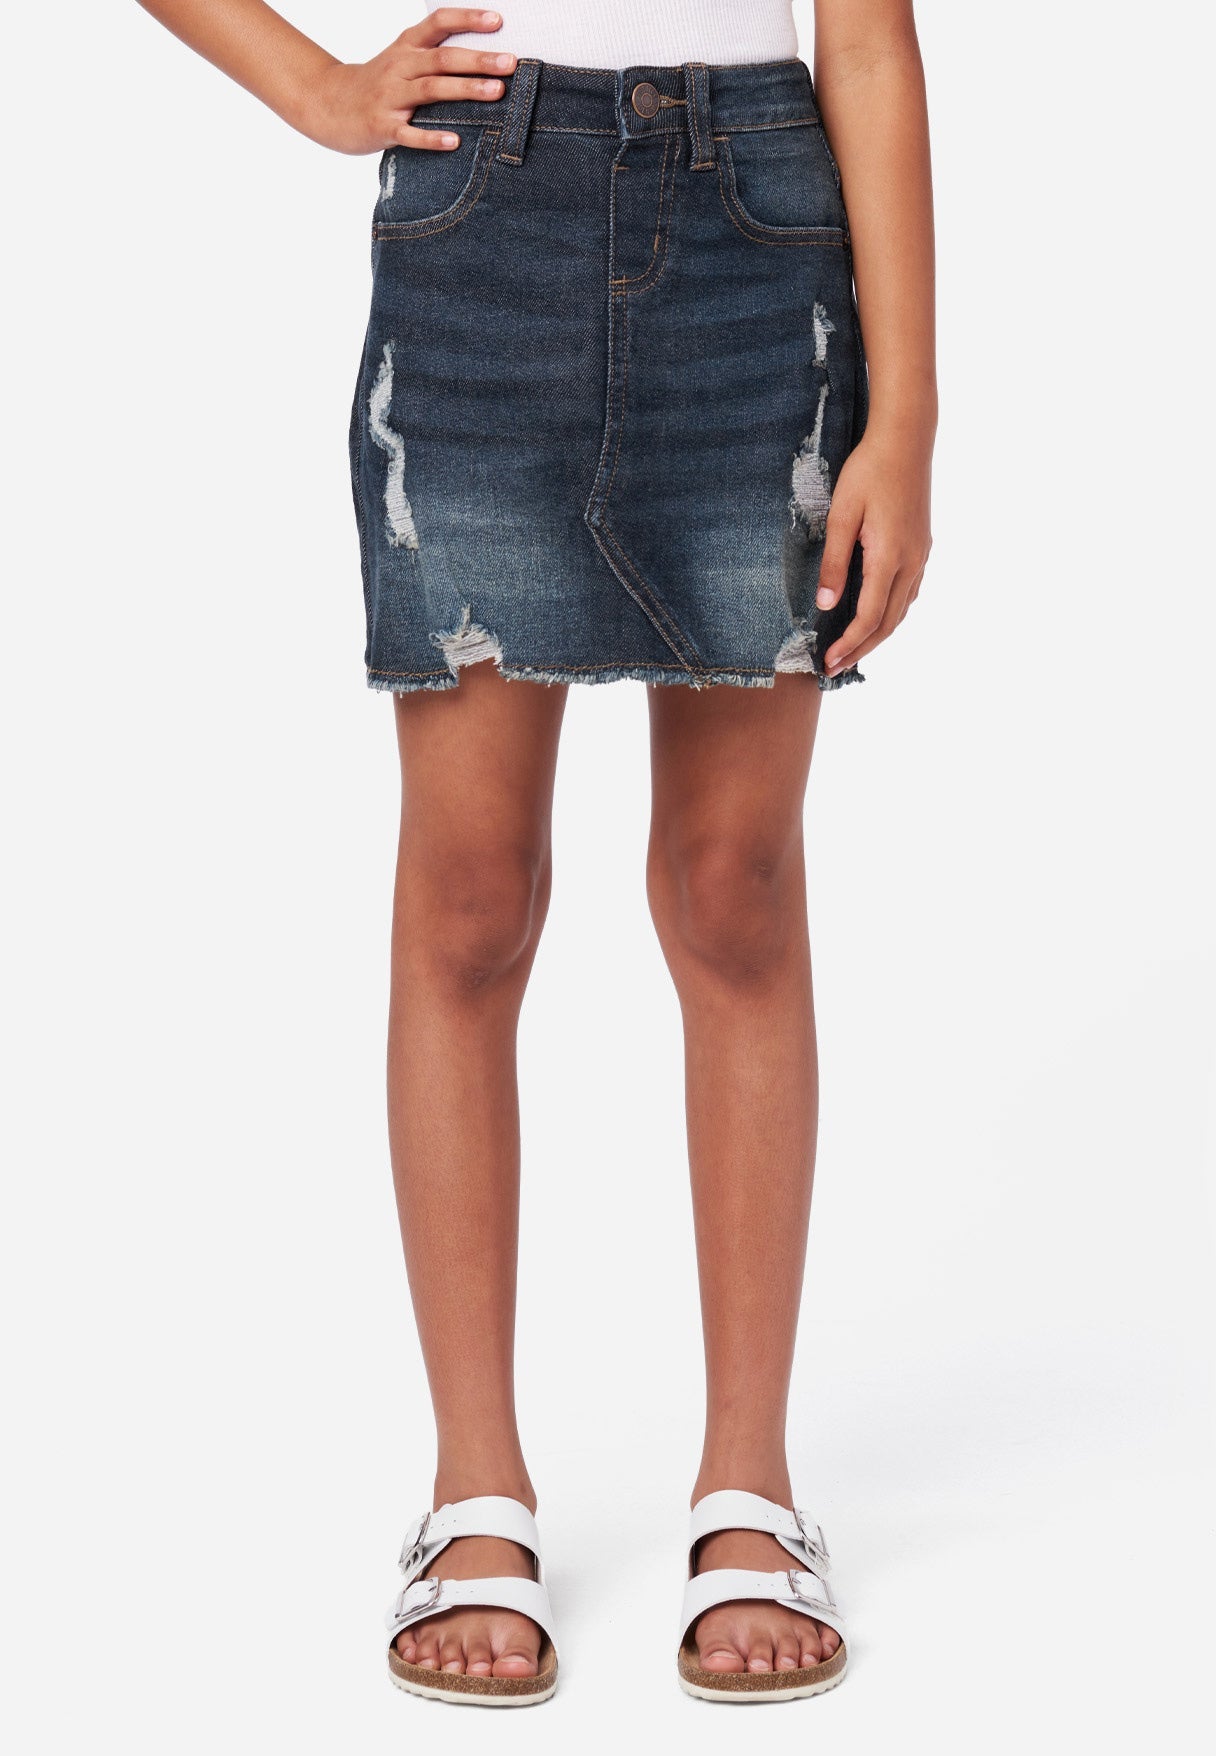 Justice Girl's Distressed Mini Denim Skirt in Dark Wash, Size 10